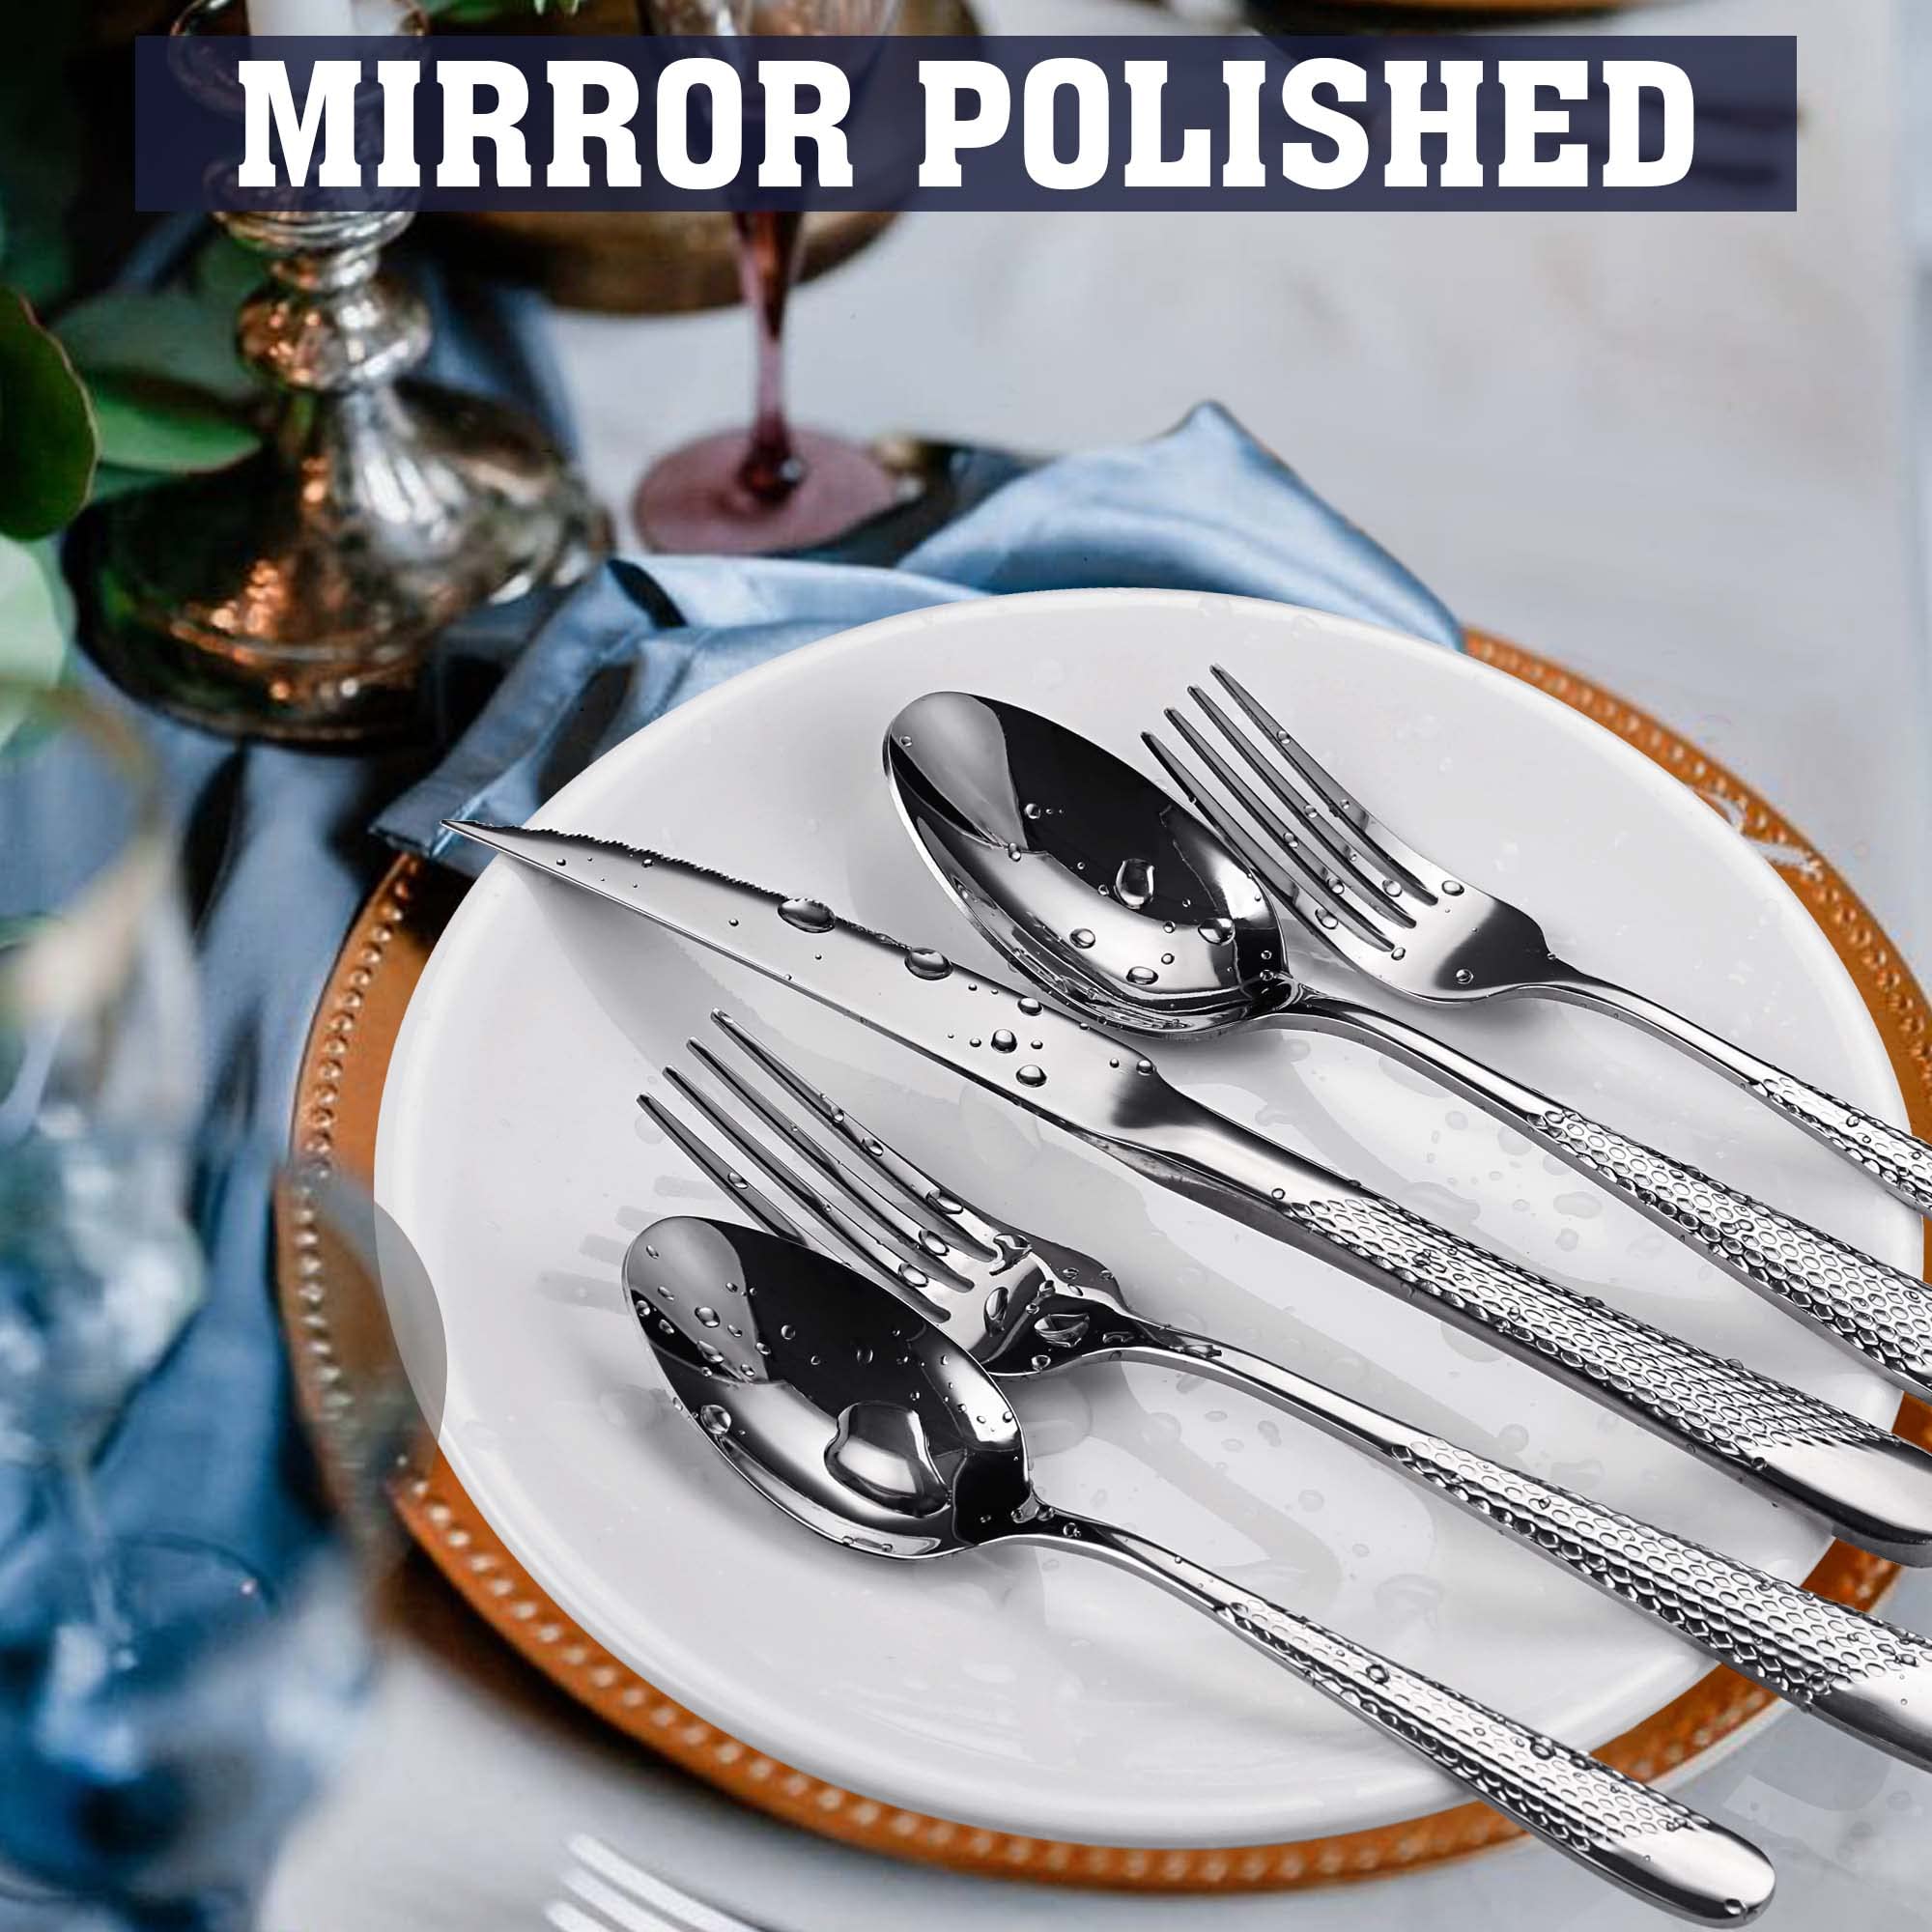 Hammered Silverware Set, 20-Piece Stainless Steel Flatware Cutlery Set for 4,Modern Kitchen Utensils Tableware Set Includes Dinner Knives/Forks/Spoons,Mirror Polished Dishwasher Safe